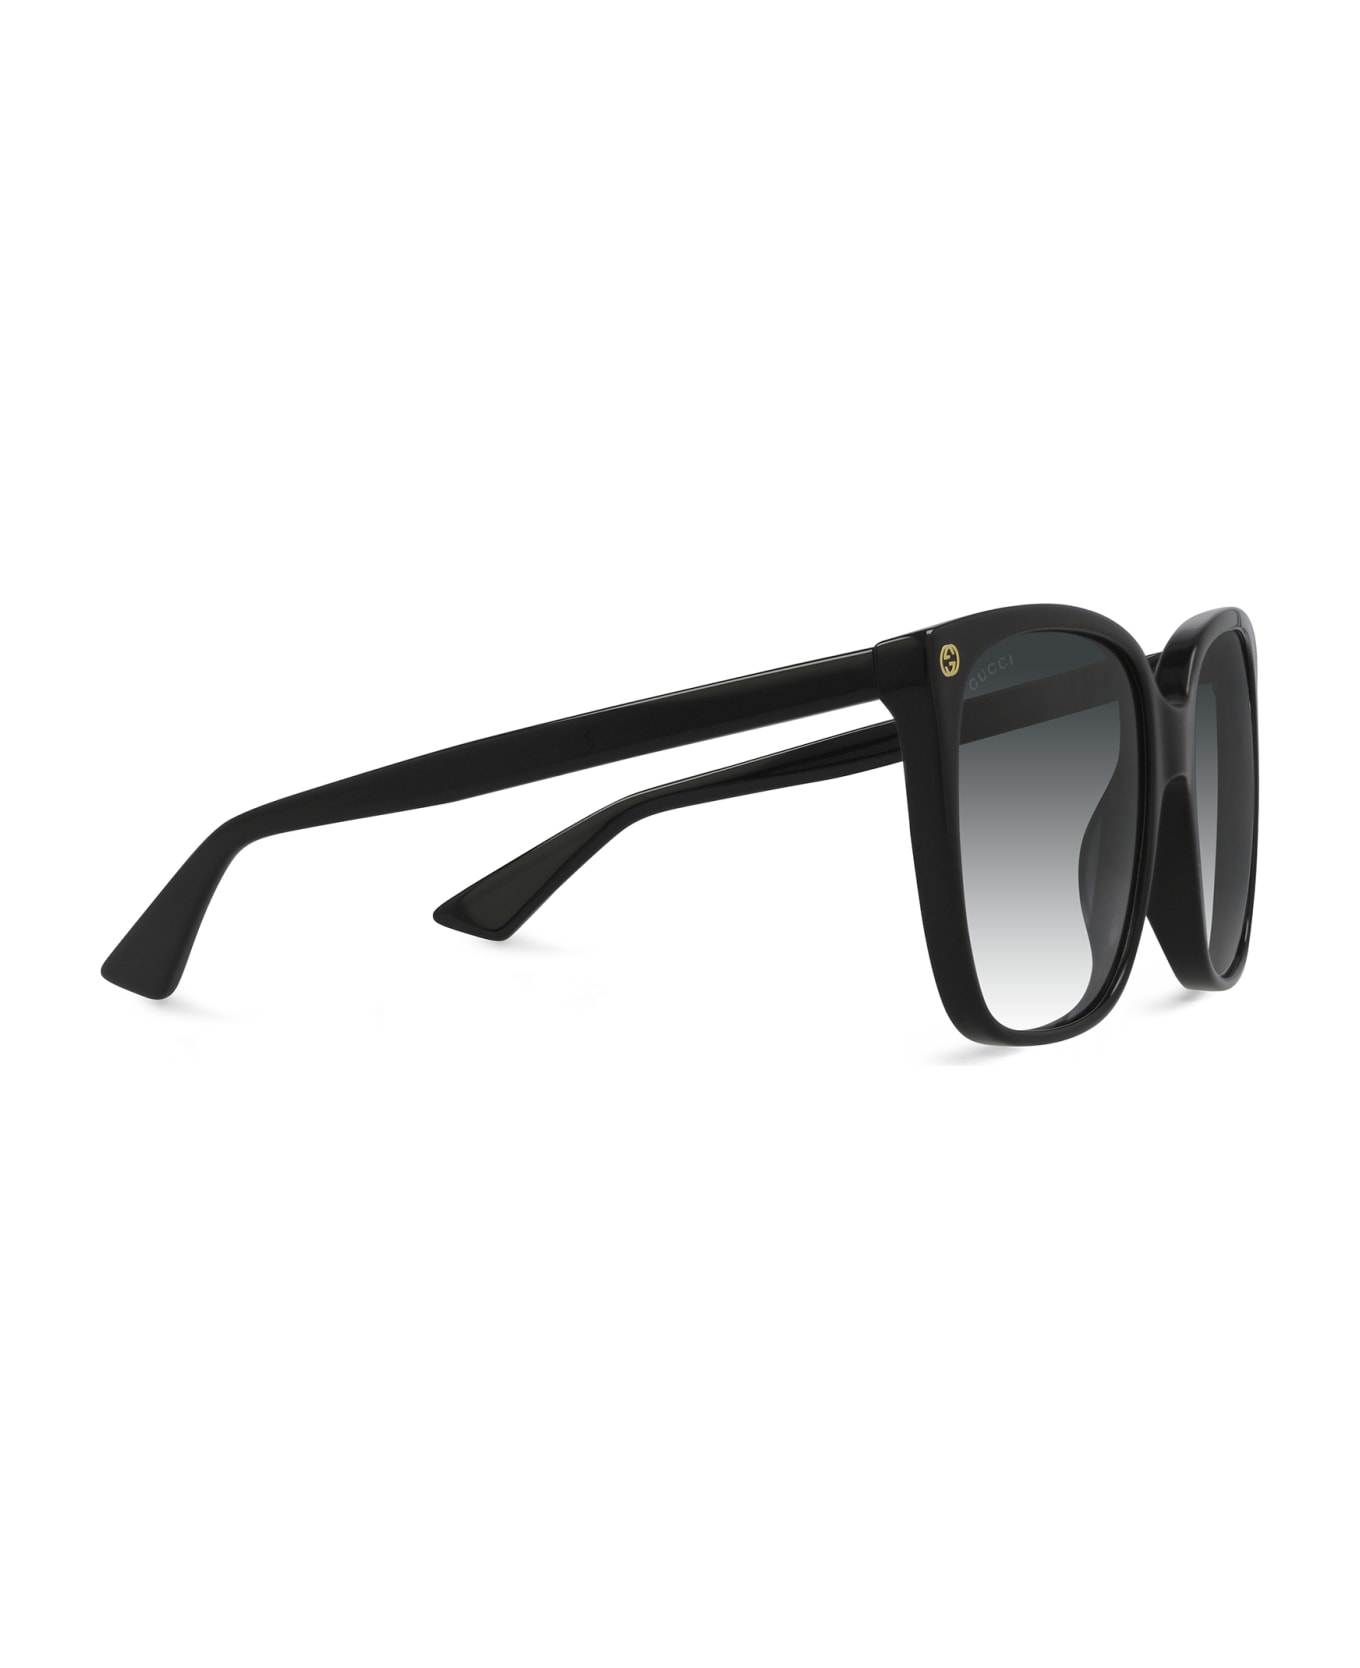 Gucci Eyewear Gg0022s Black Sunglasses - Black